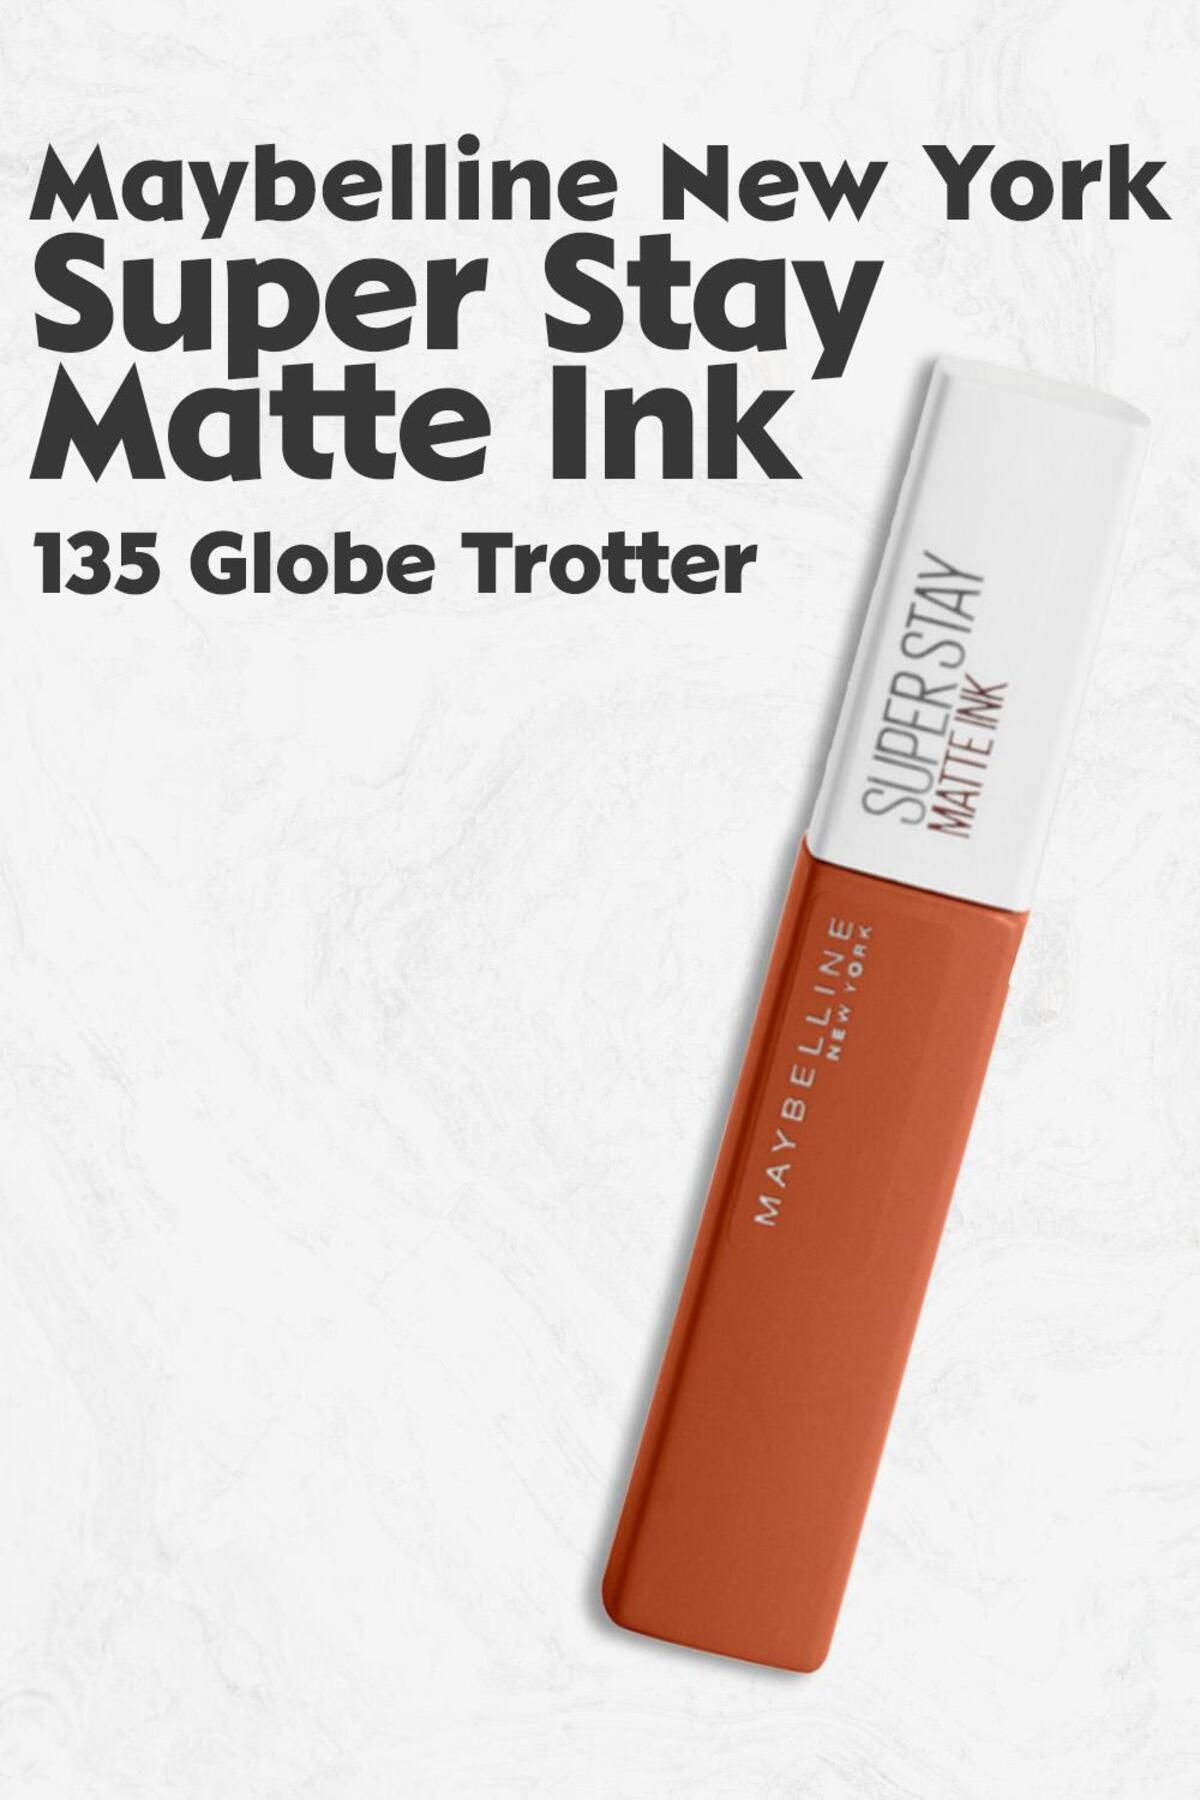 Maybelline New York Maybelline Super Stay Matte Ink 135 Globe Trotter